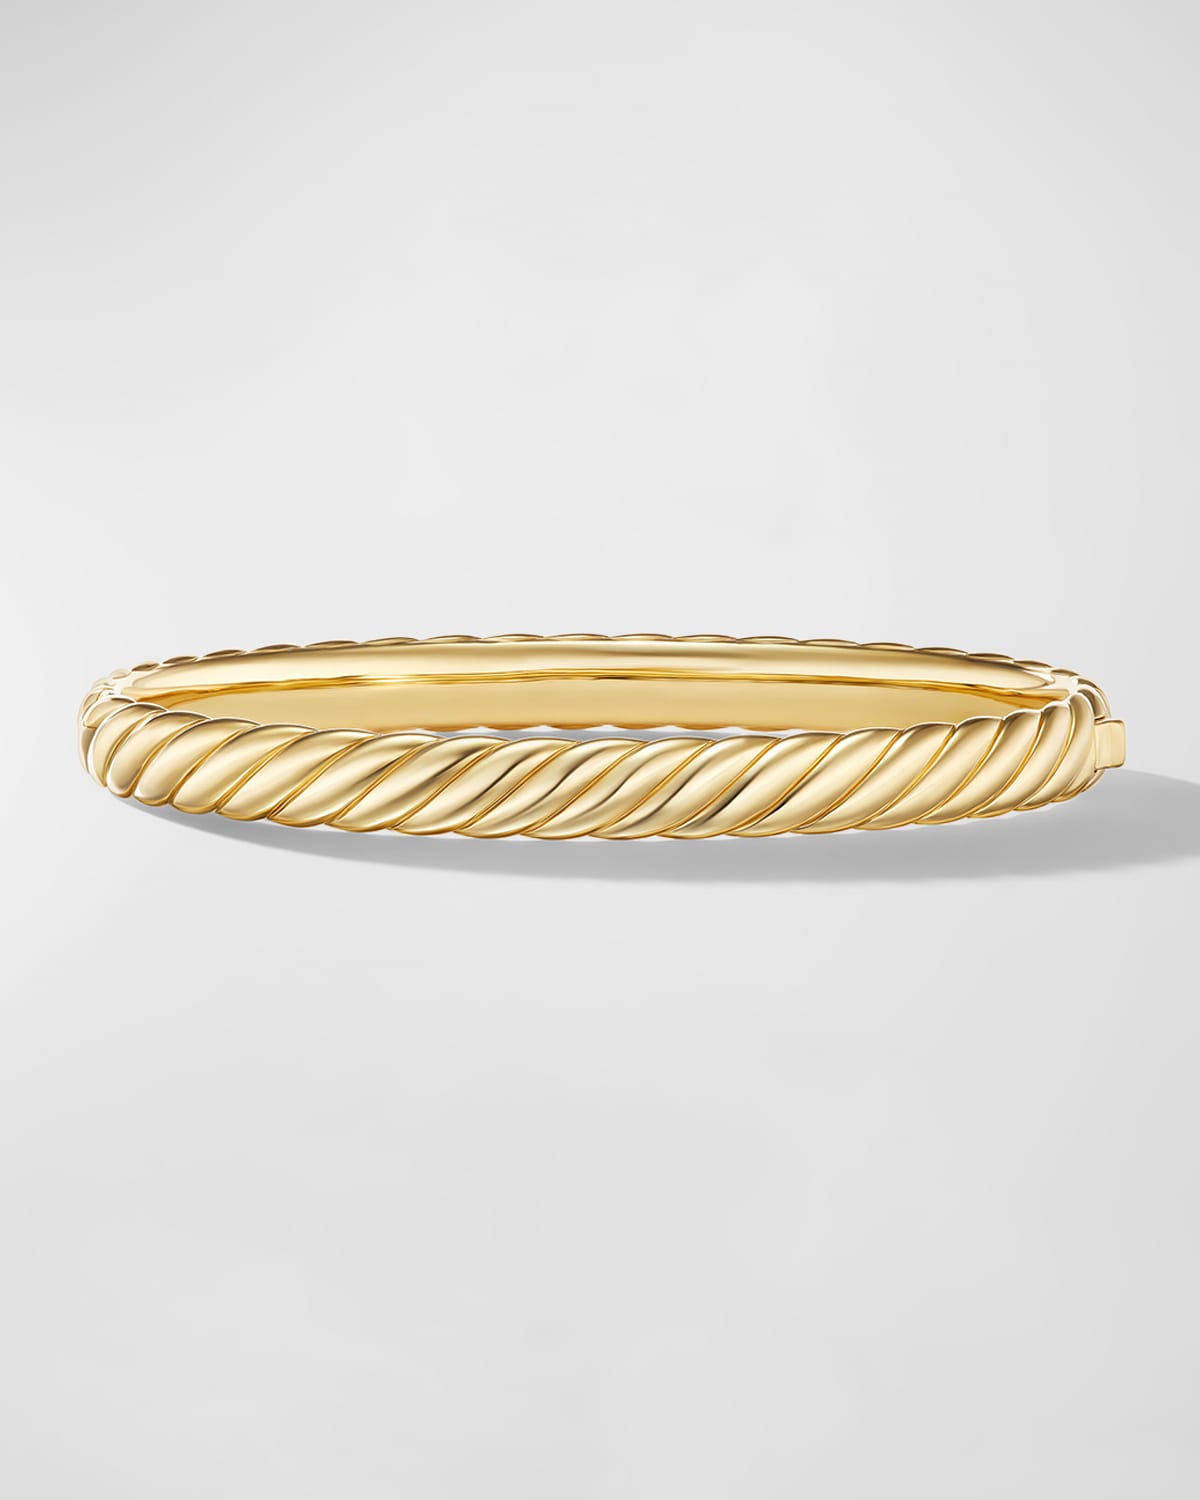 David Yurman Sculpted Cable Bracelet in 18K Gold, 6mm, Size L